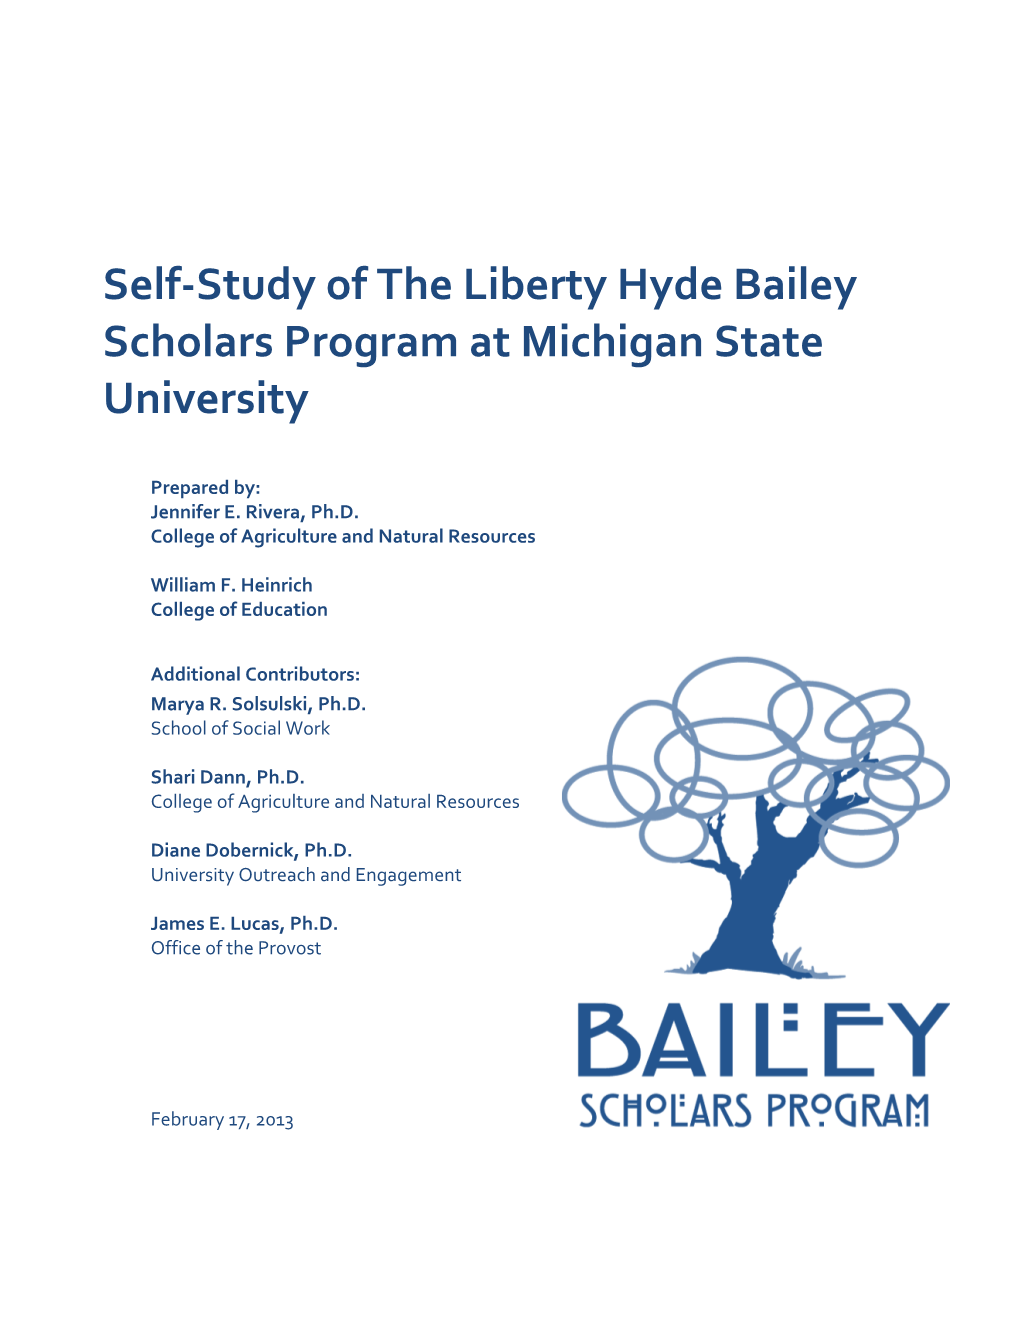 Self-Study of the Liberty Hyde Bailey Scholars Program at Michigan State University